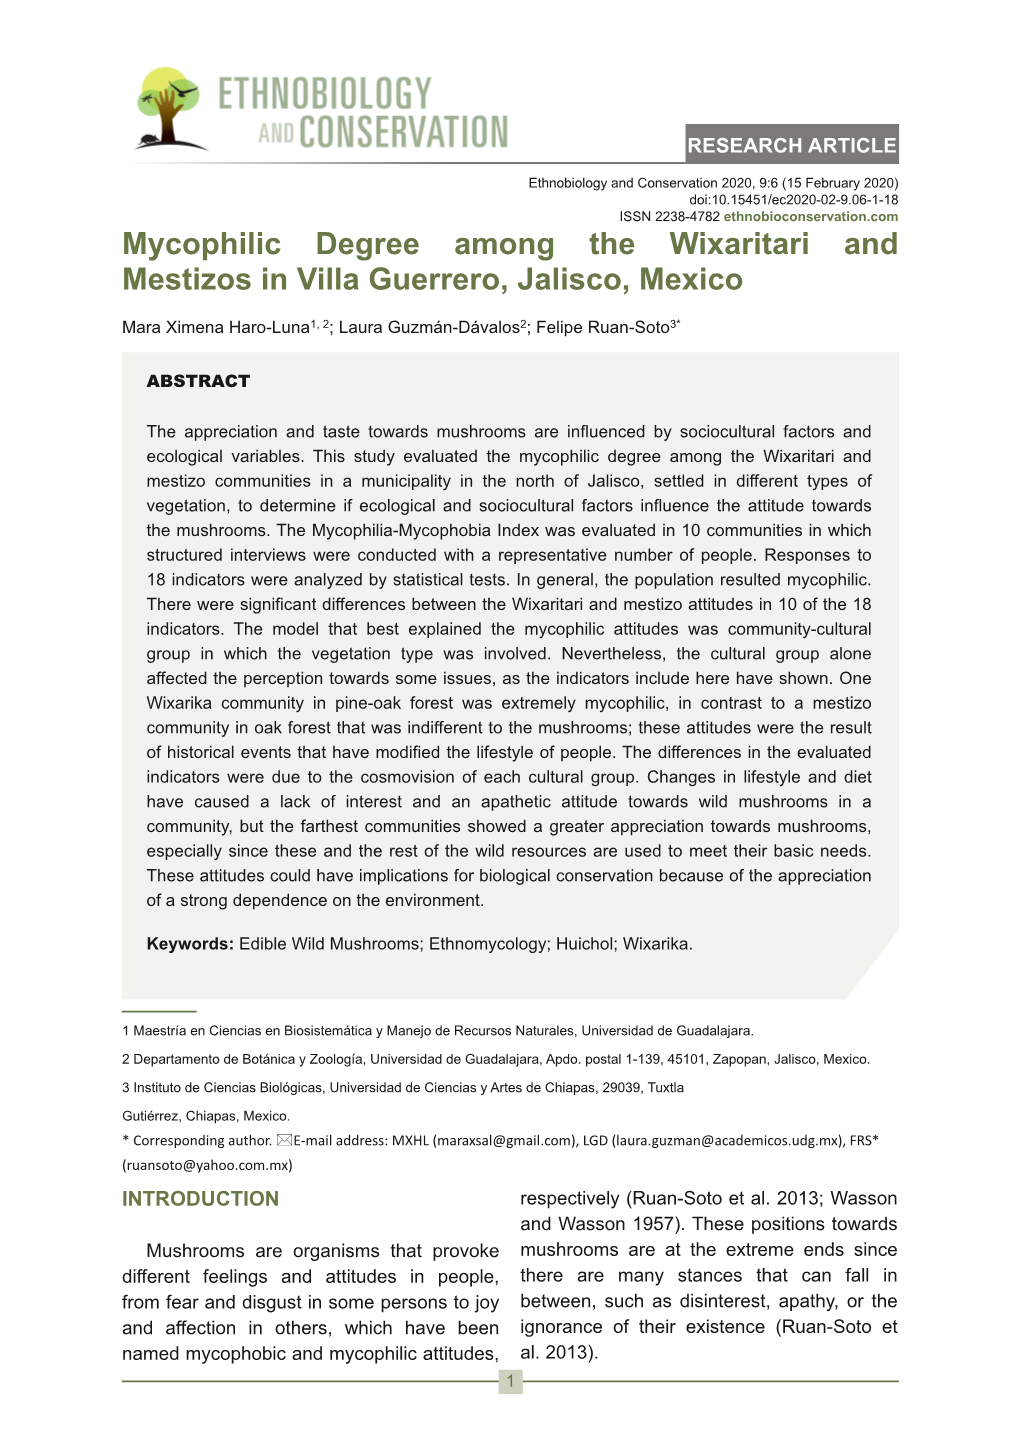 Mycophilic Degree Among the Wixaritari and Mestizos in Villa Guerrero, Jalisco, Mexico